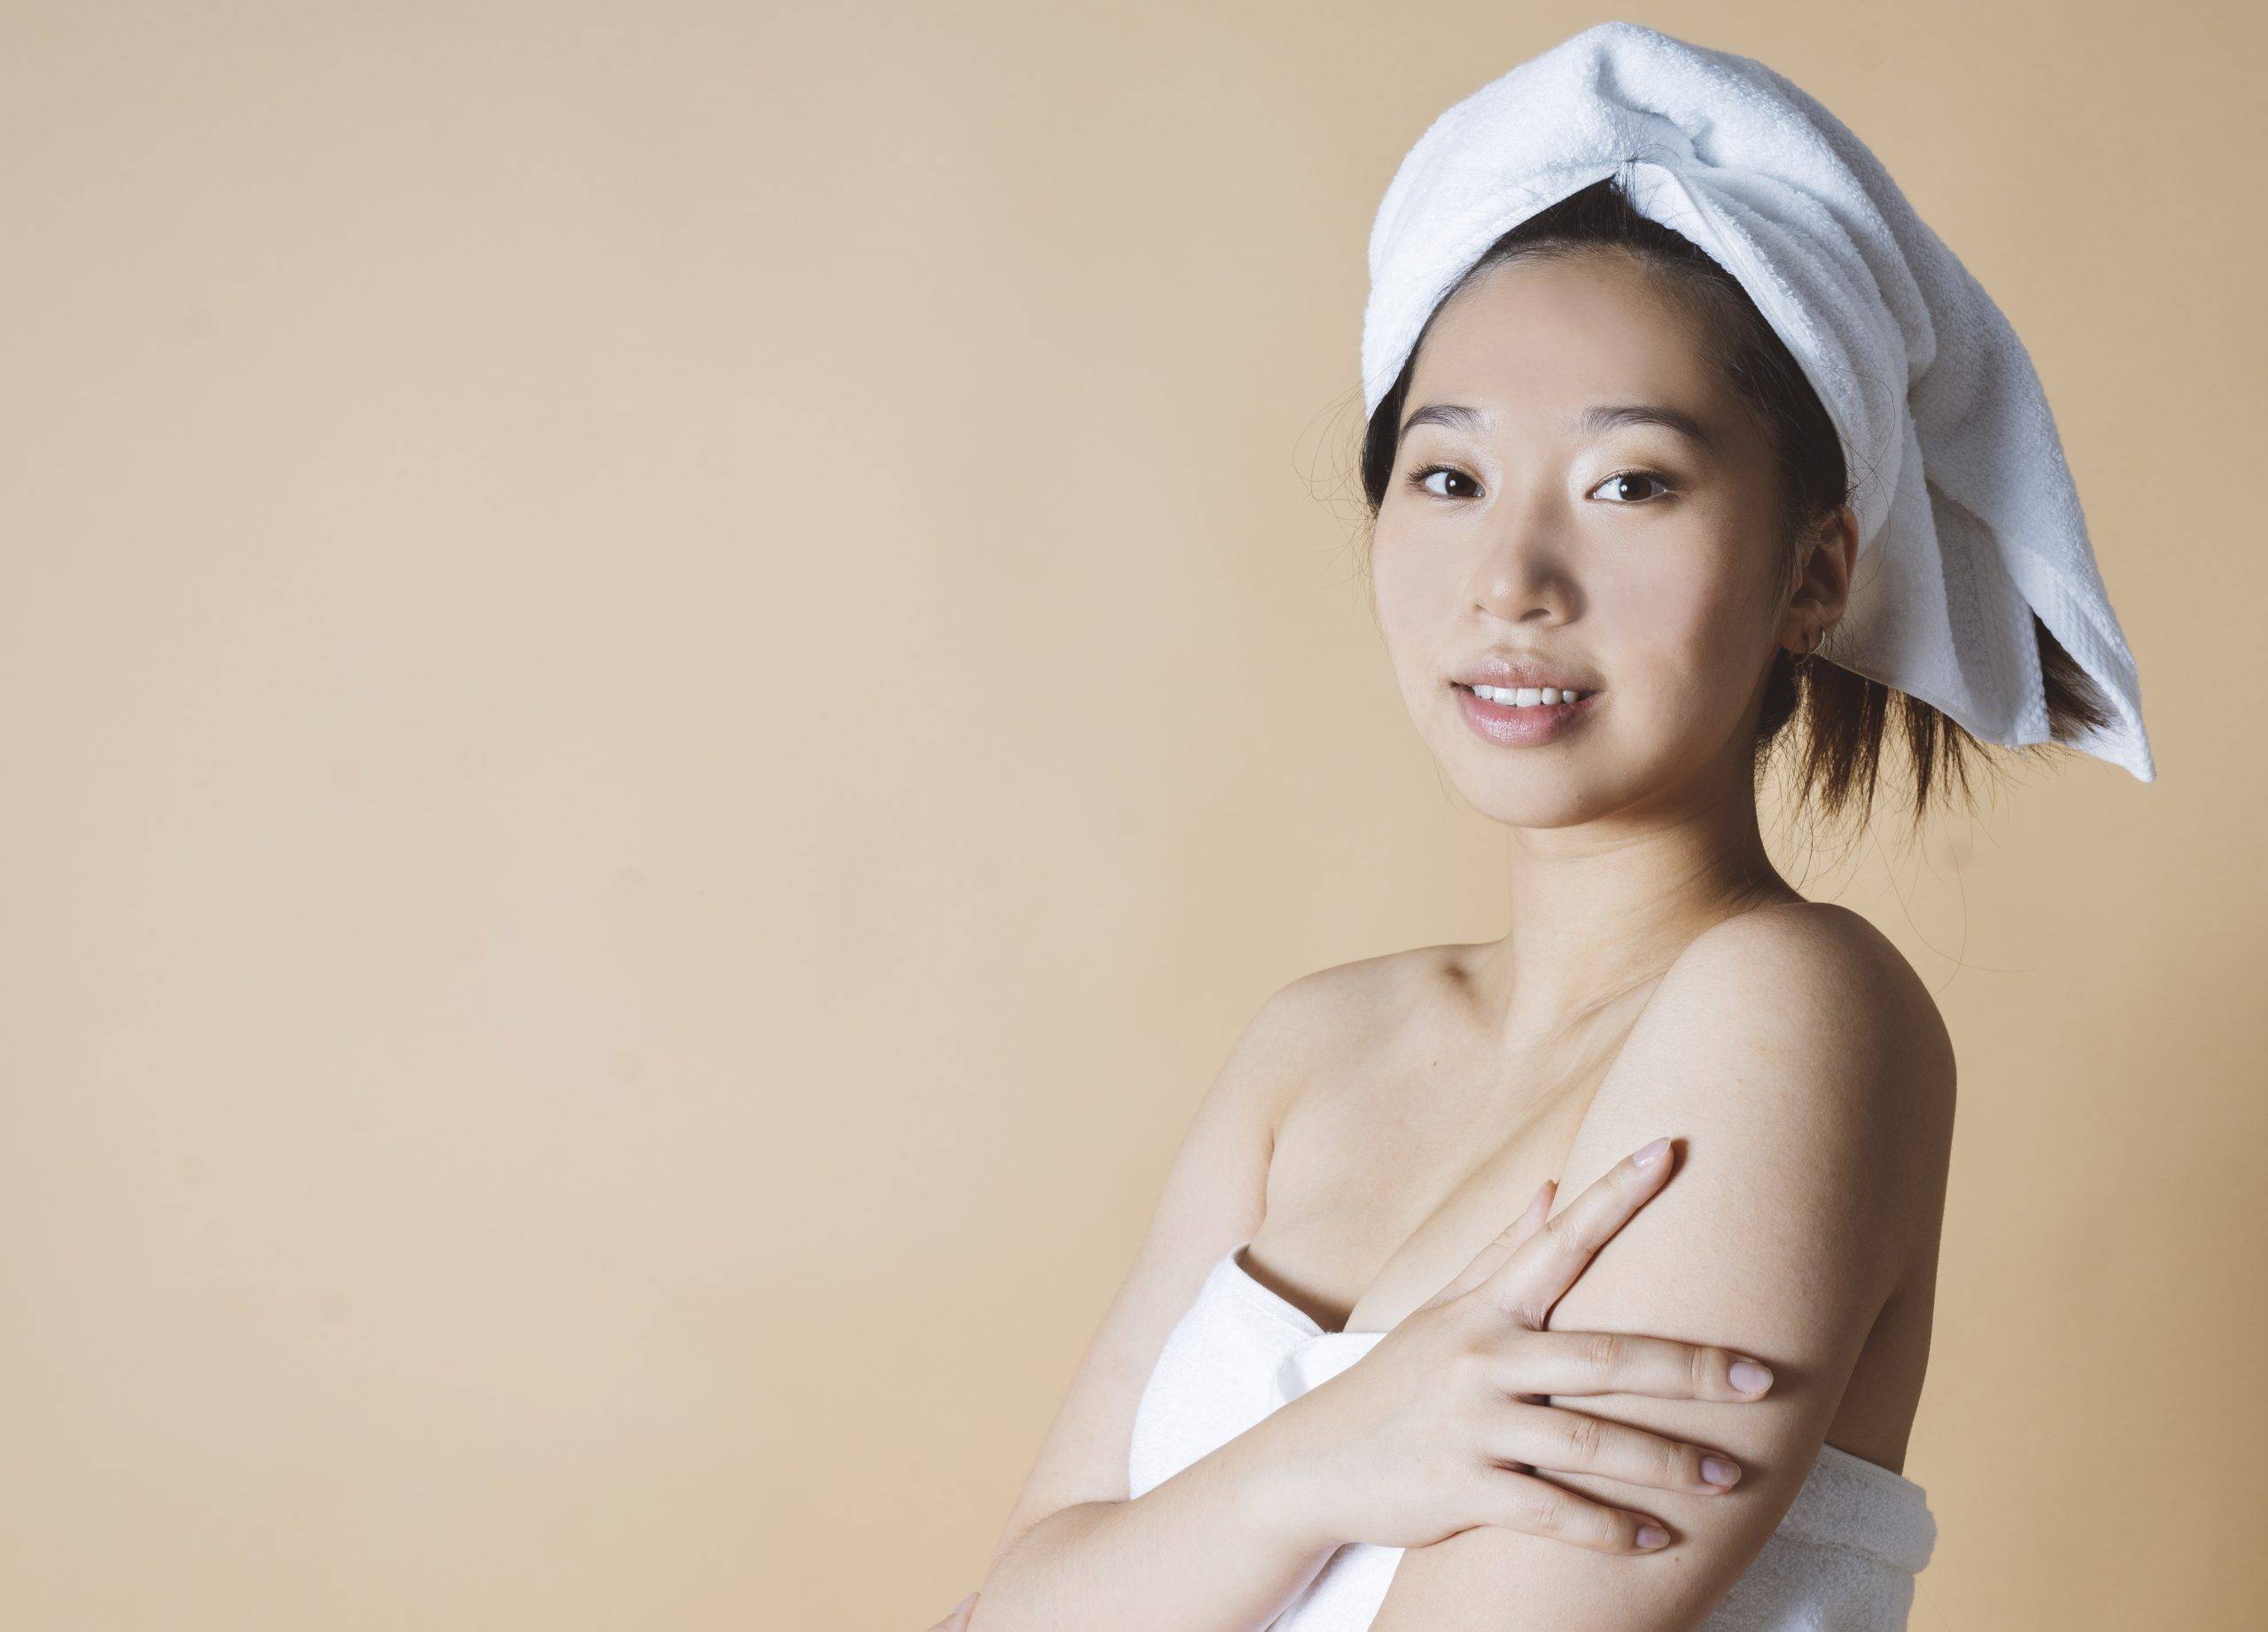 Chinese woman undergoes dermaplaning treatment